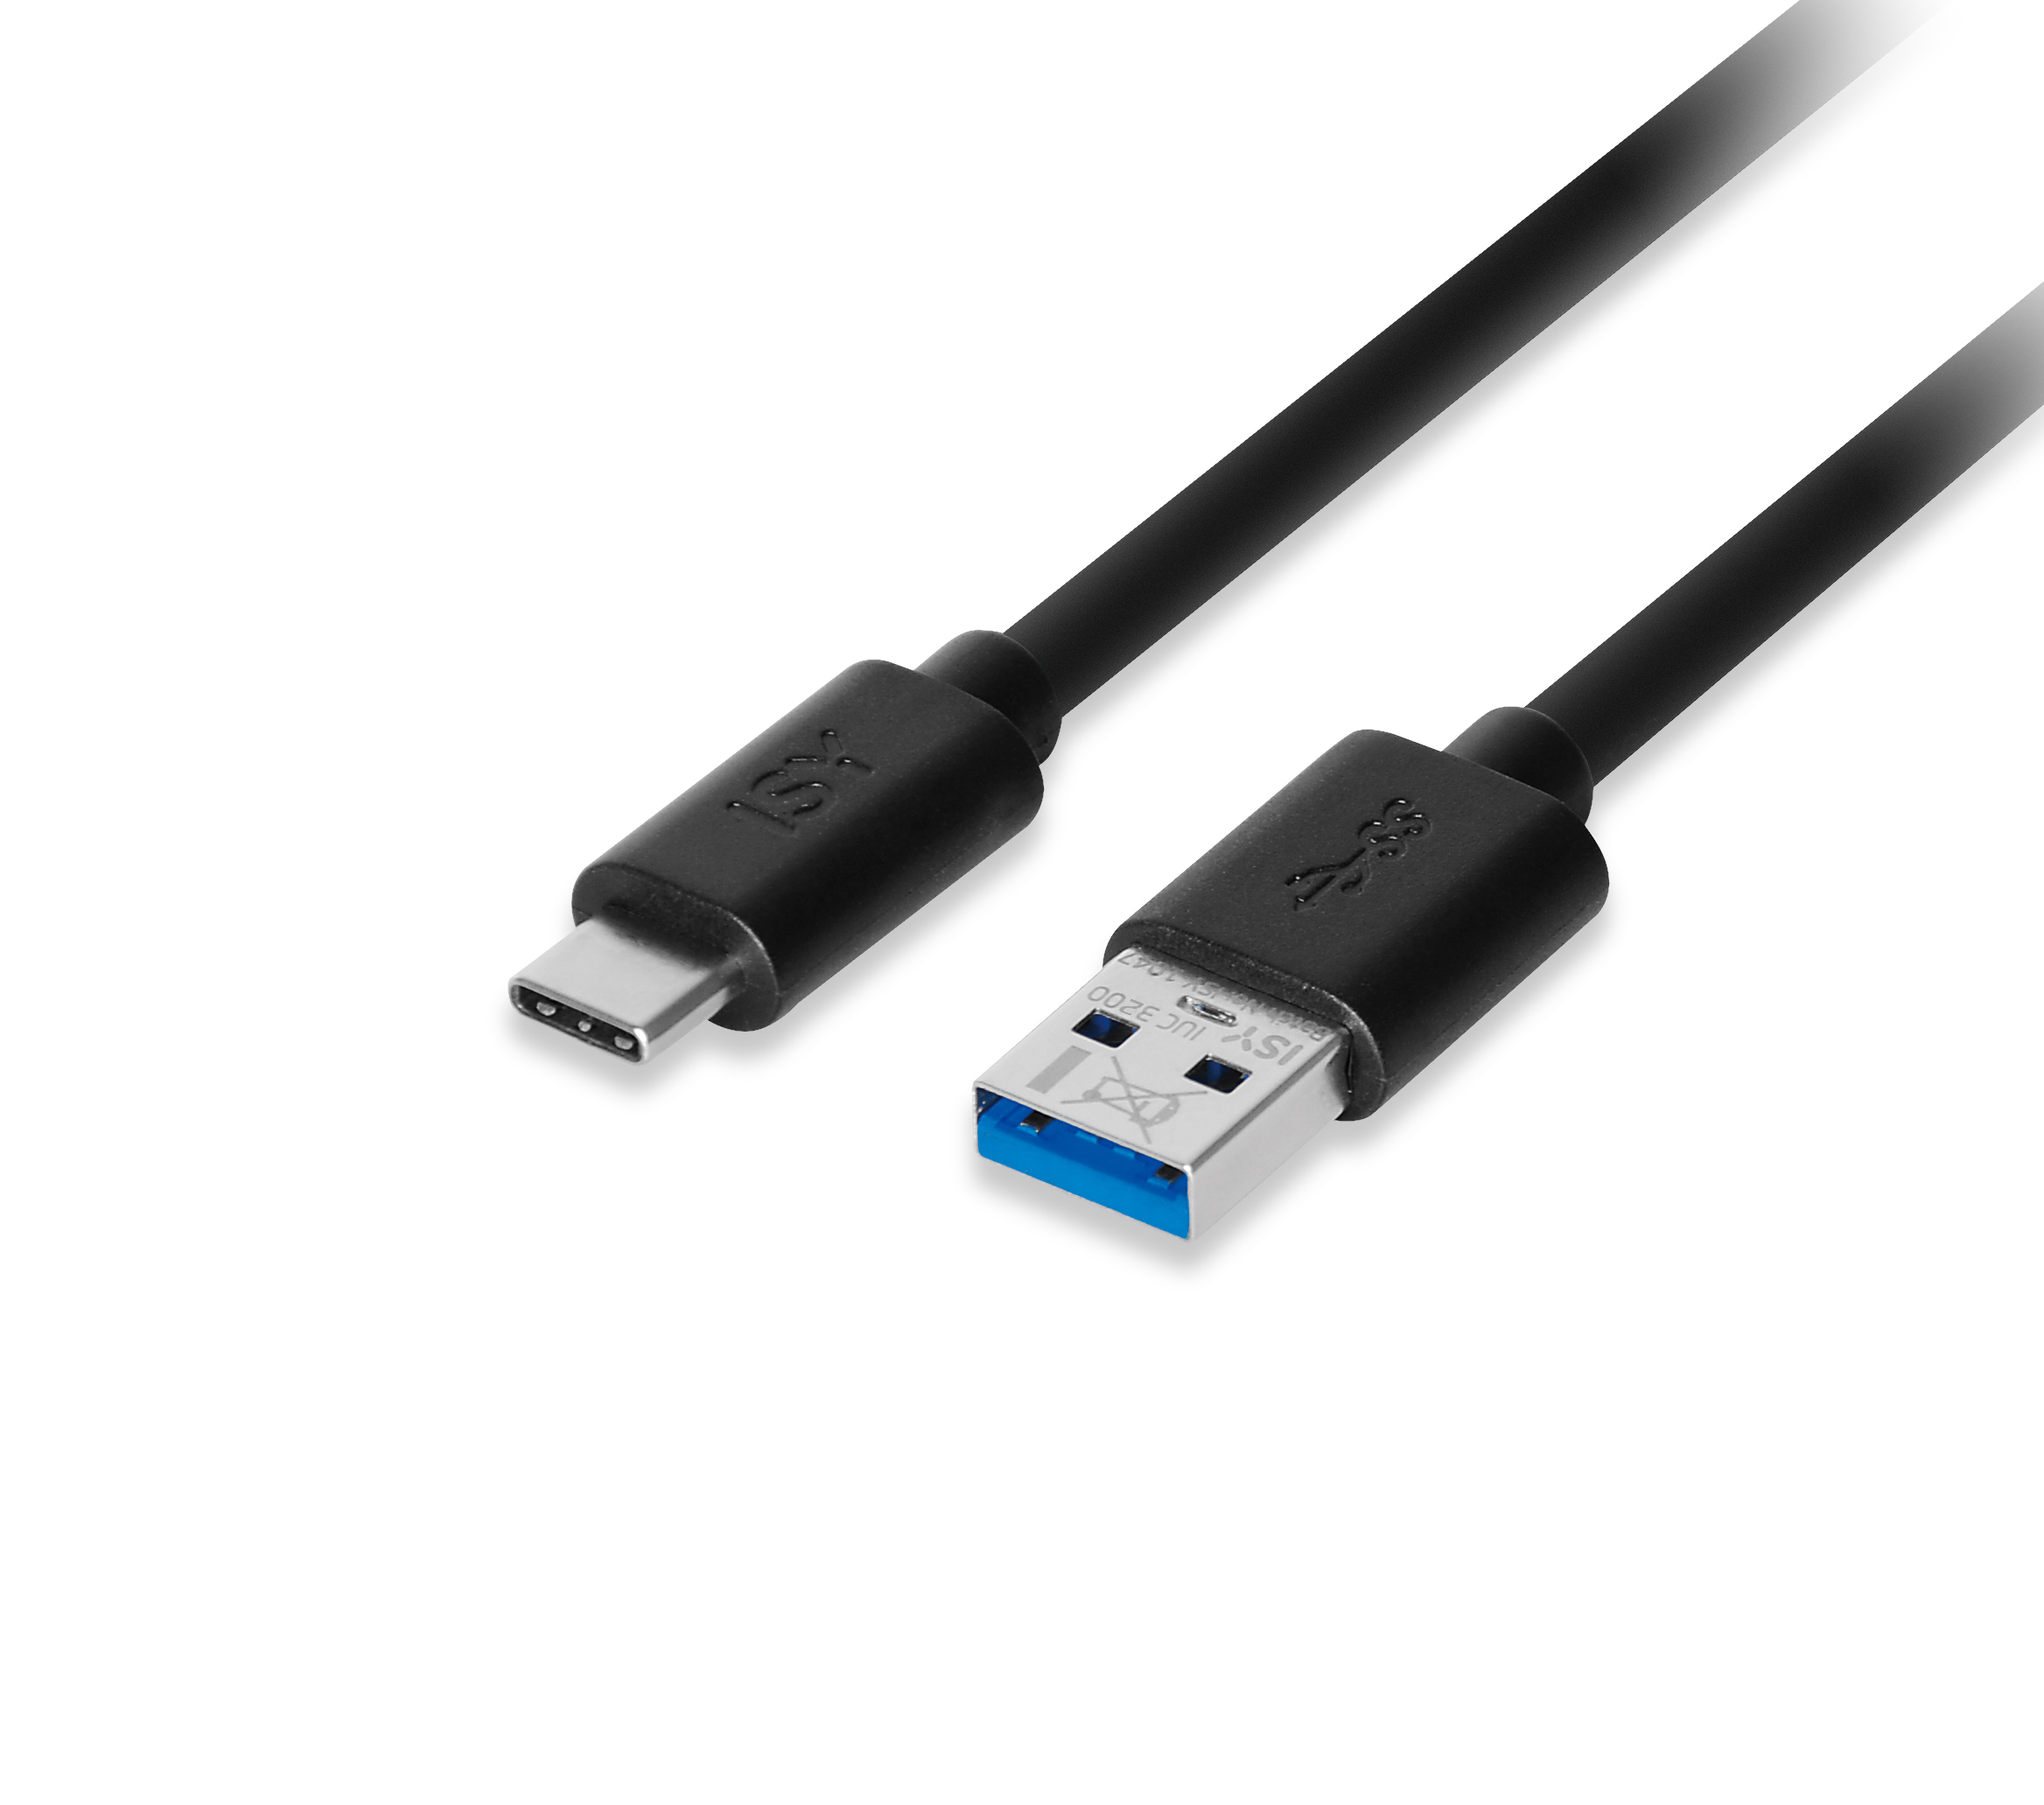 ISY IUC-3200 USB-C m, Schwarz 3.0 Datenkabel/Ladekabel, 2 Datenkabel